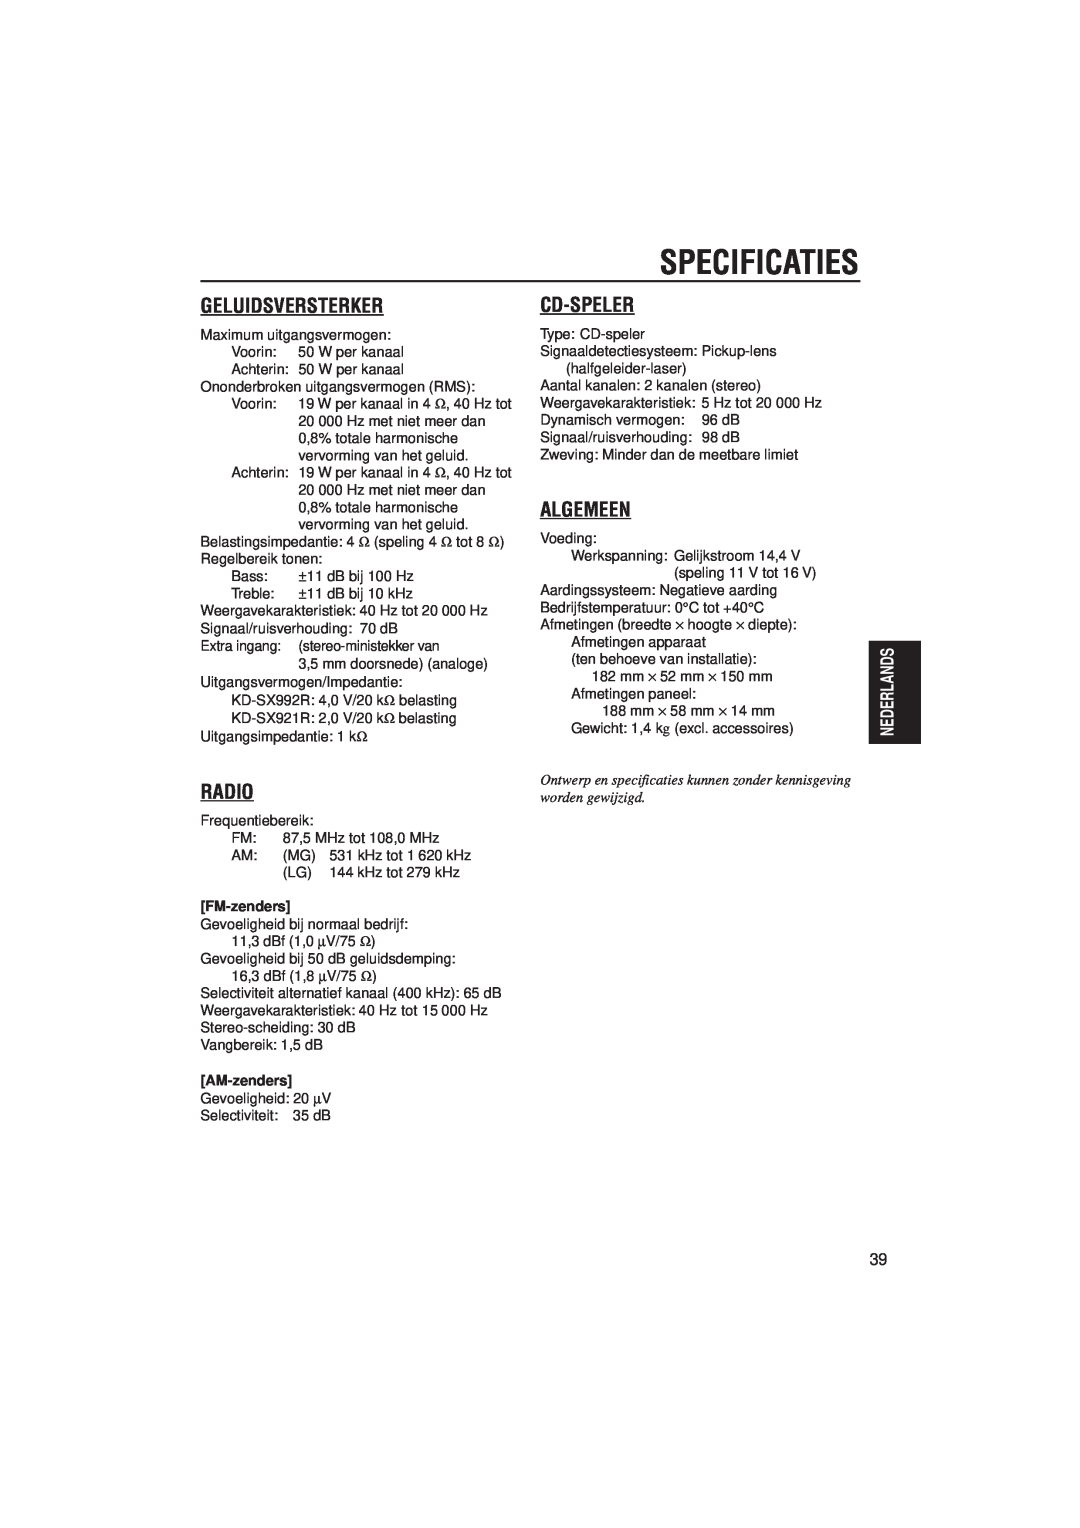 JVC KD-SX992R, KD-SX921R manual Specificaties, Geluidsversterker, Radio, Cd-Speler, Algemeen, FM-zenders, AM-zenders 